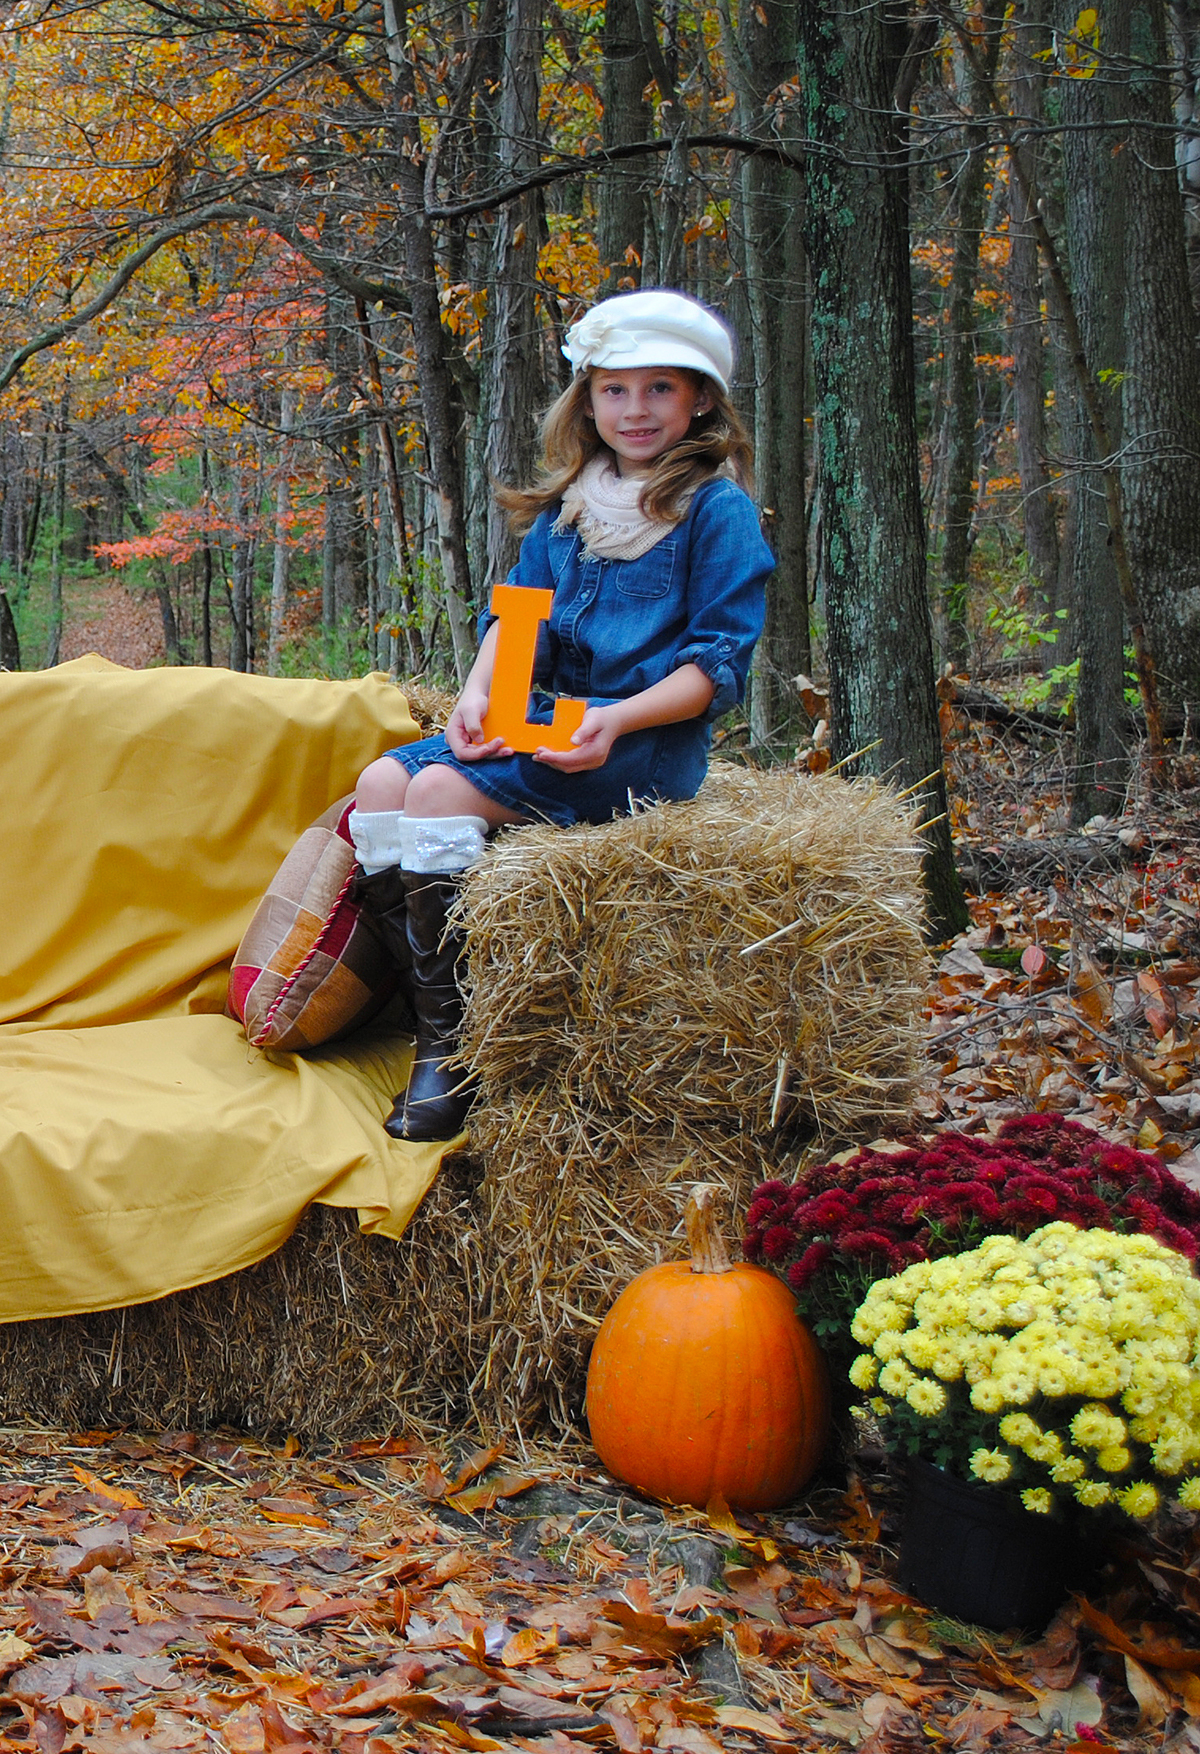 Fall setting Nature outdoors family kids